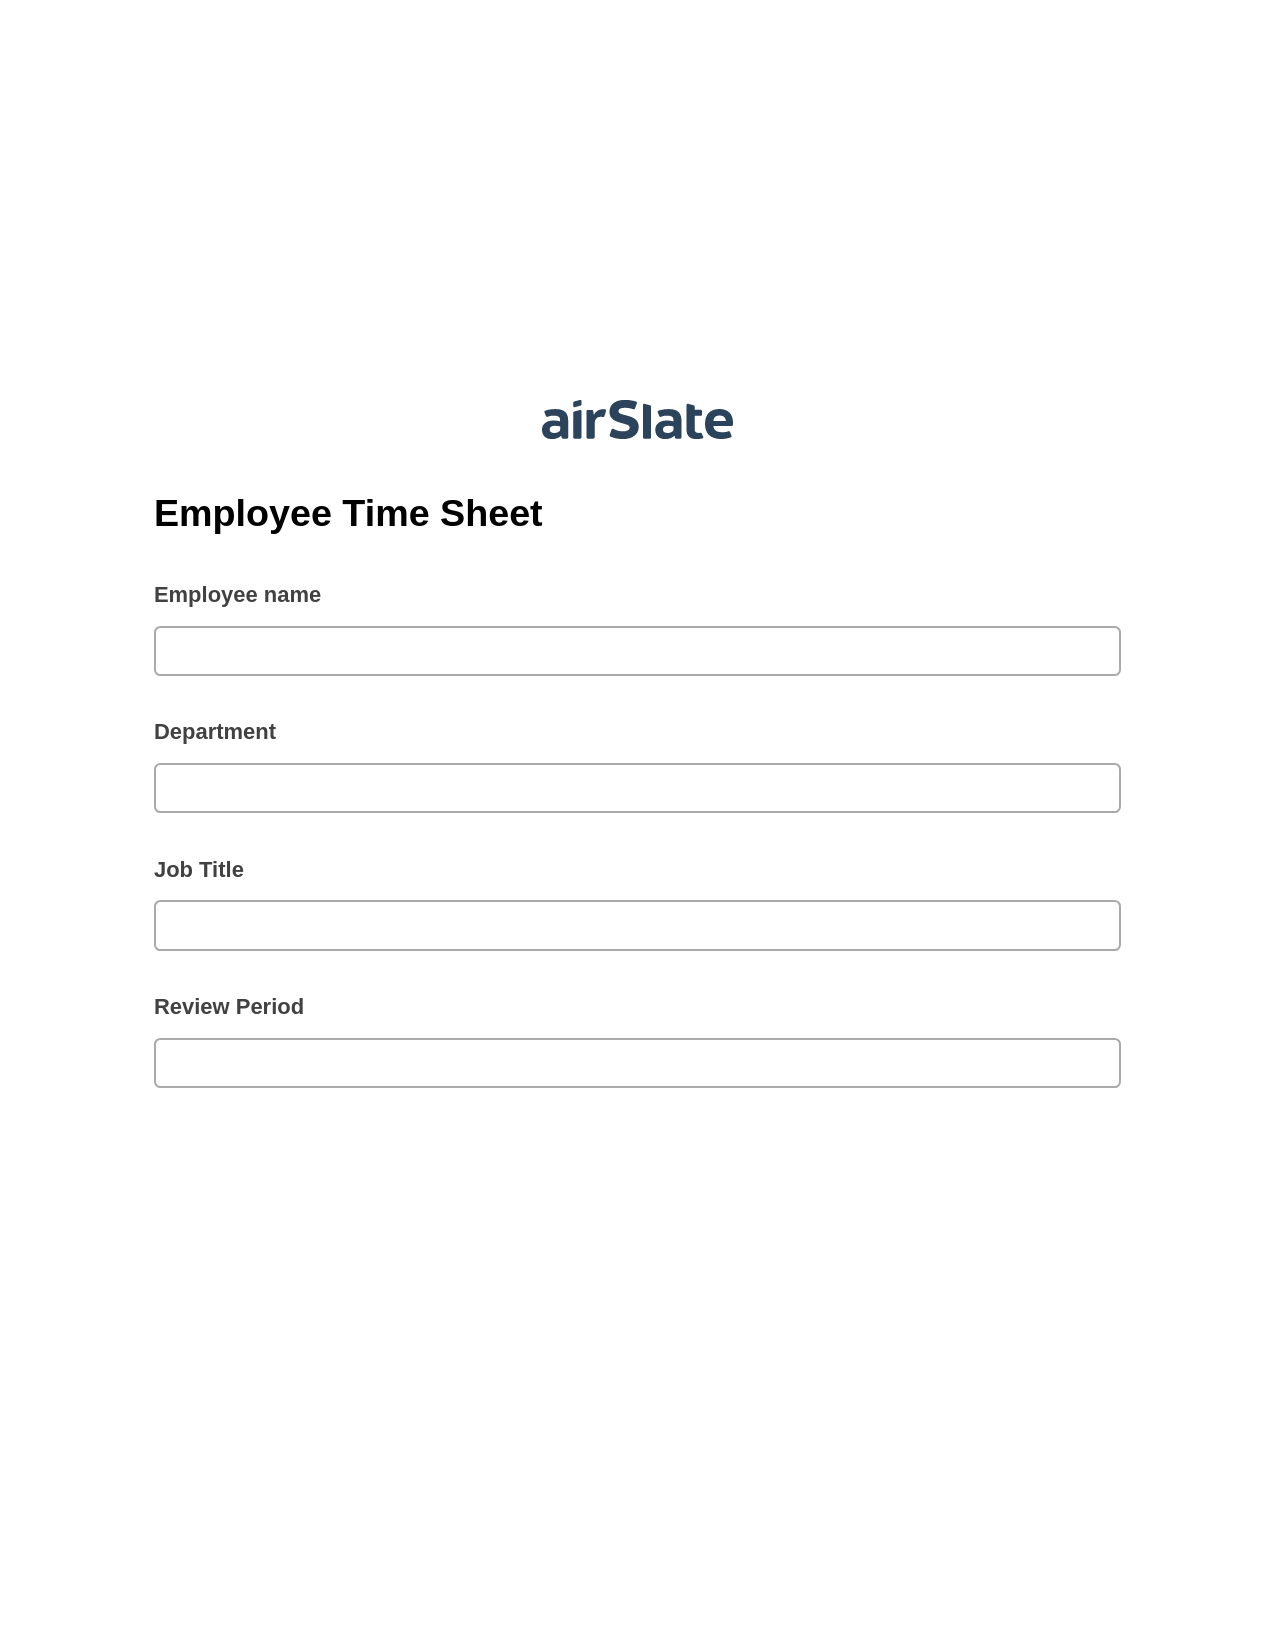 Multirole Employee Time Sheet Pre-fill from CSV File Bot, Update Audit Trail Bot, Webhook Postfinish Bot